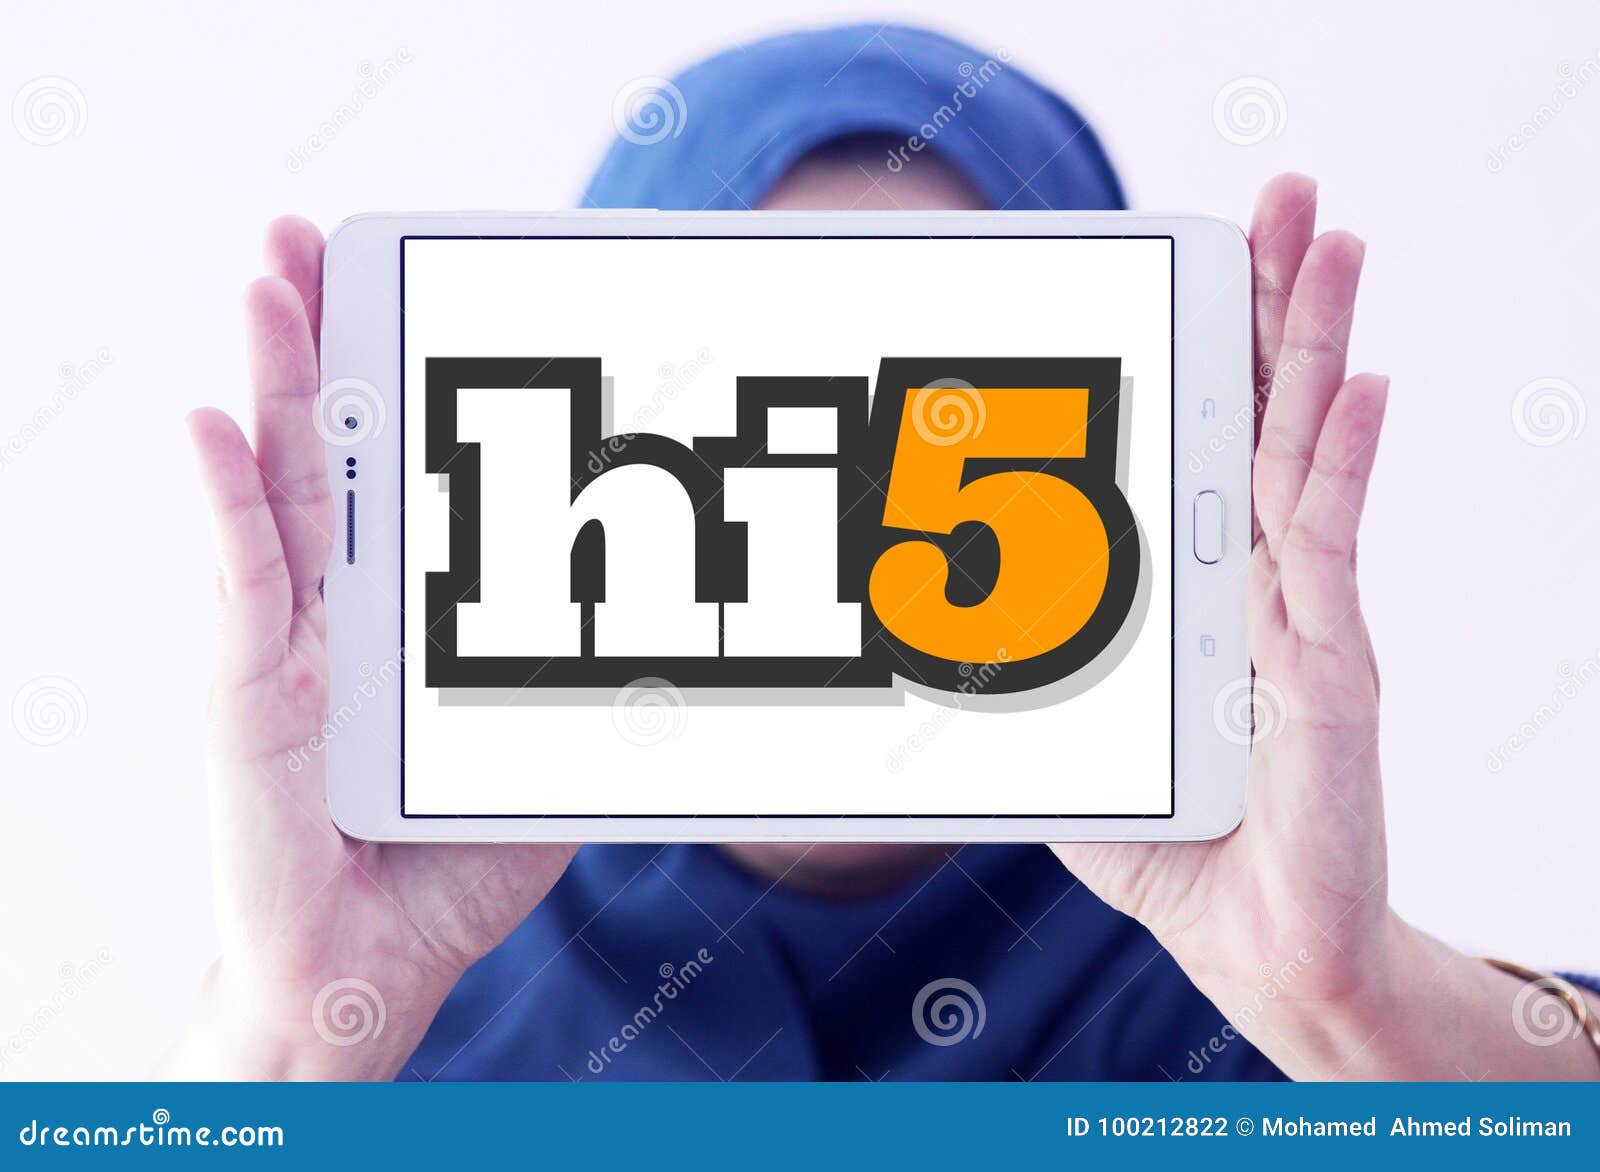 In hi5 sign hi5